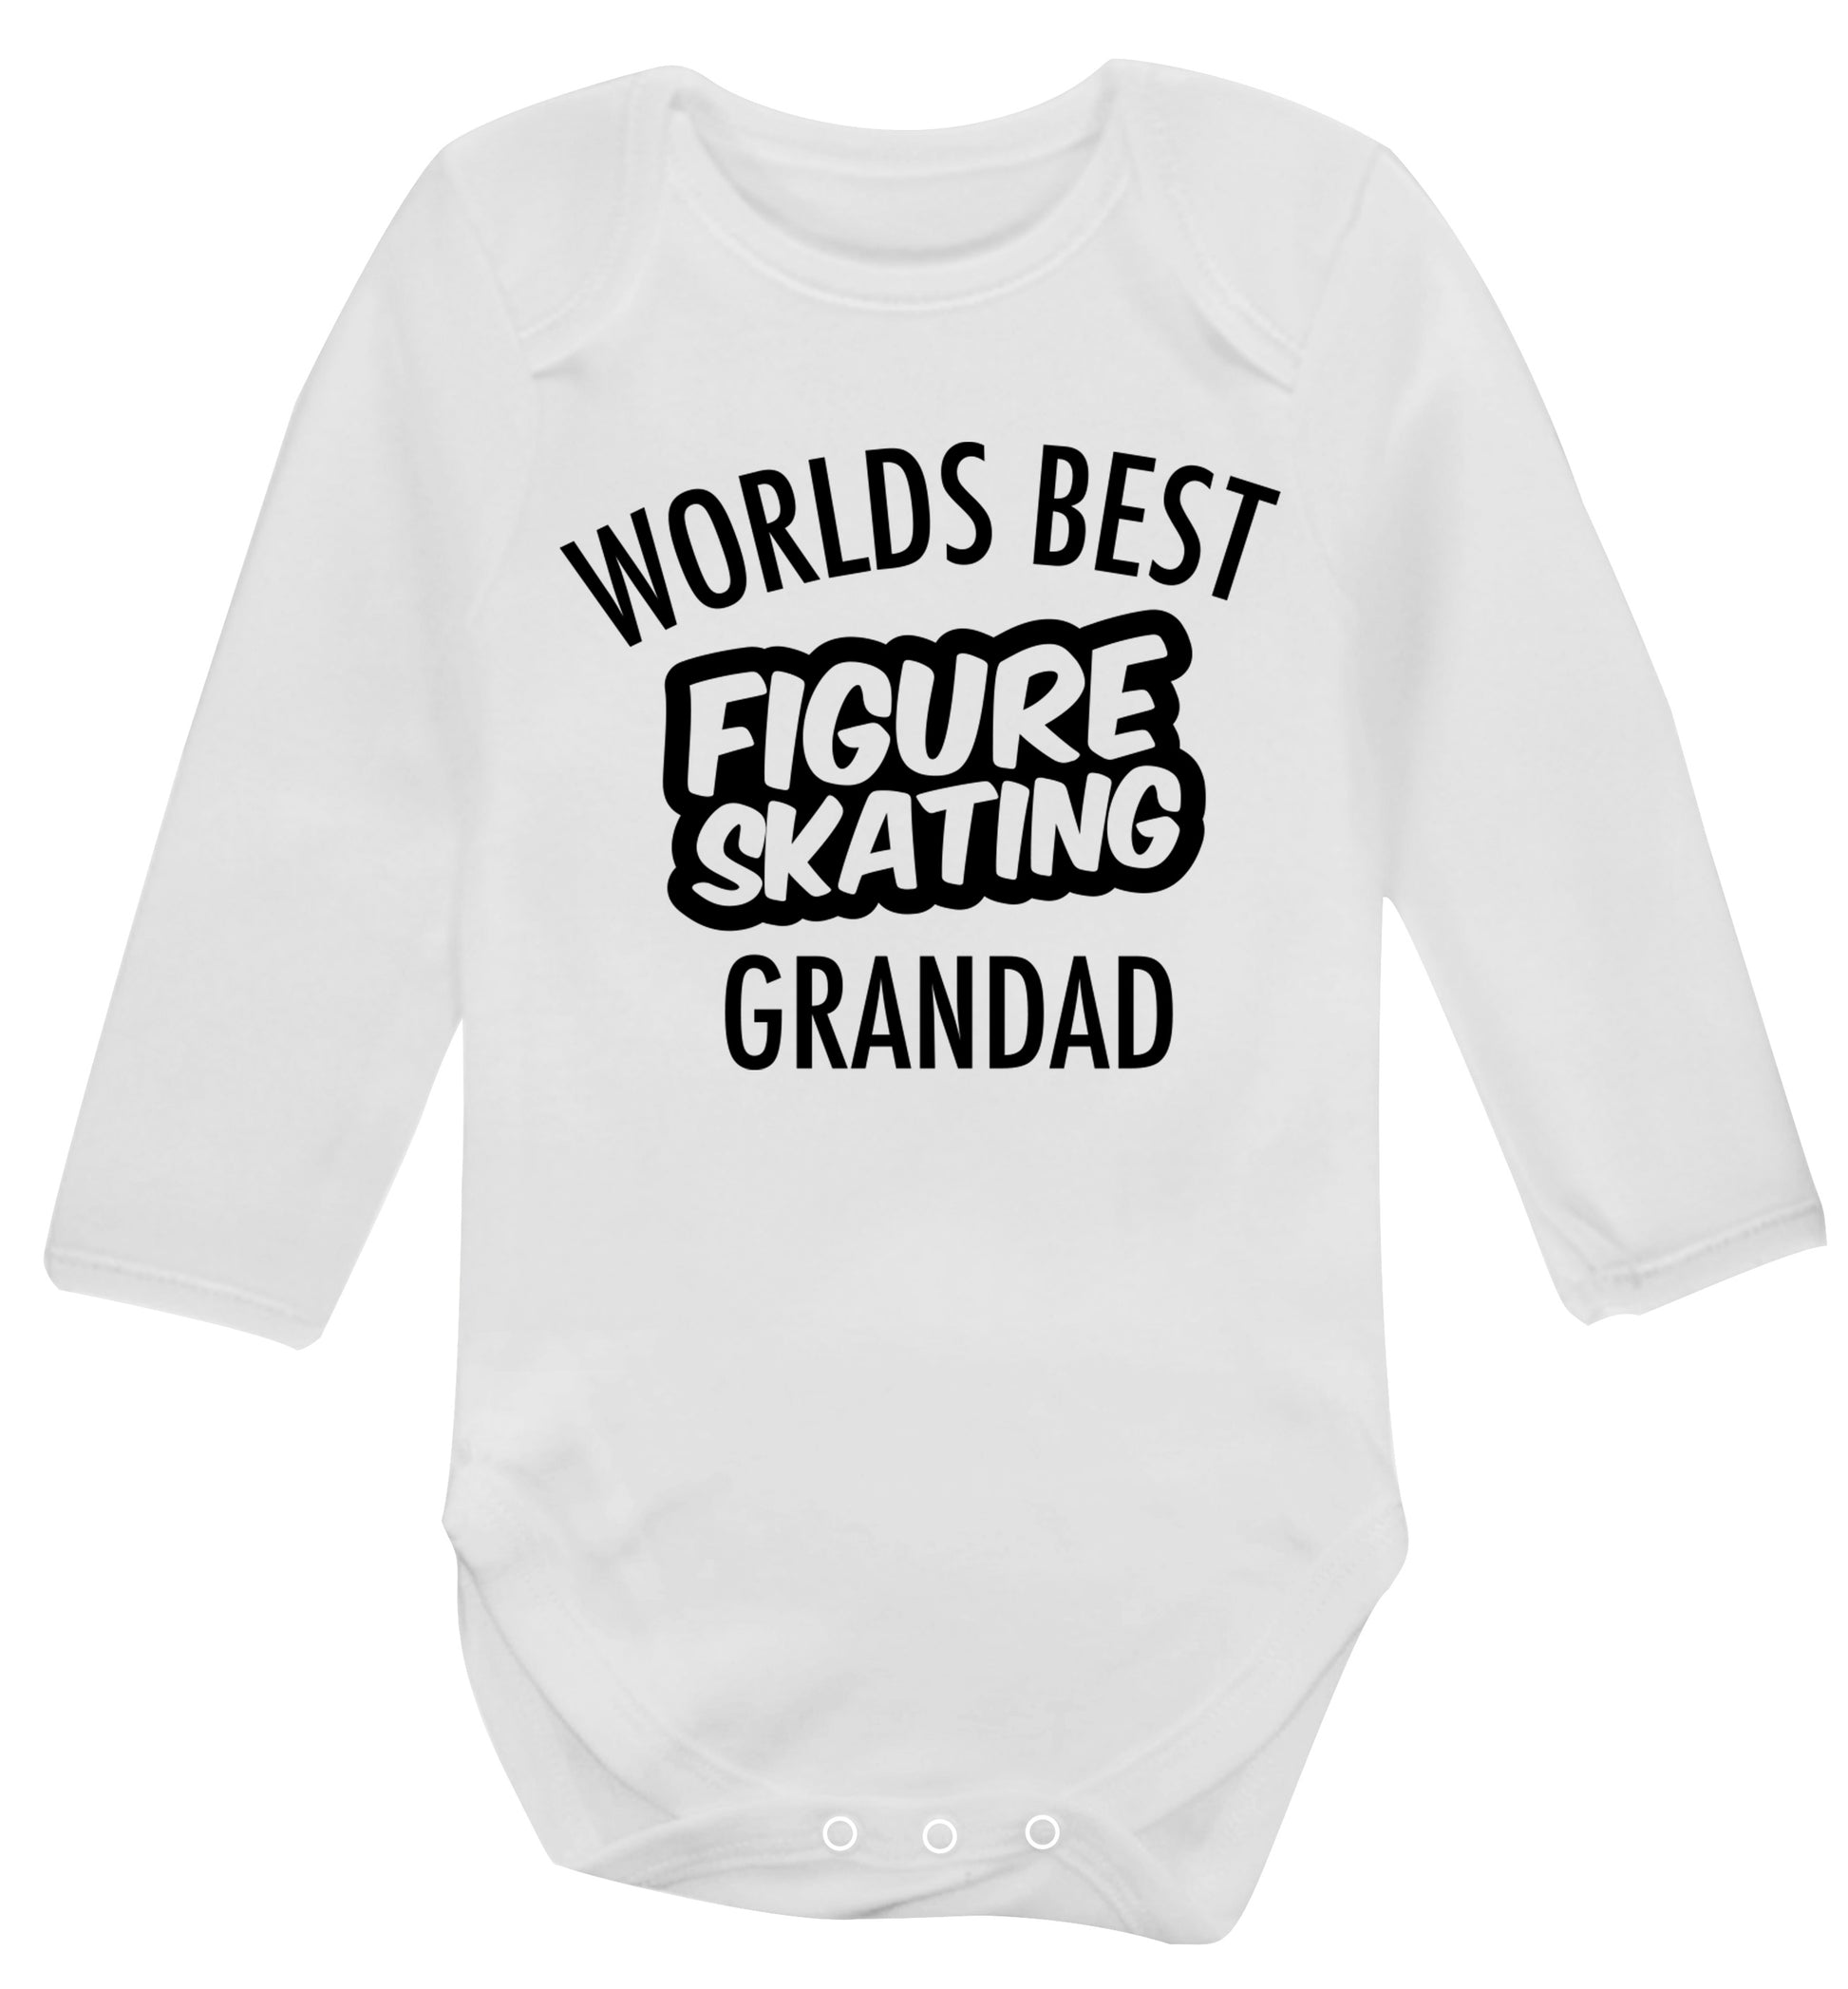 Worlds best figure skating grandad Baby Vest long sleeved white 6-12 months